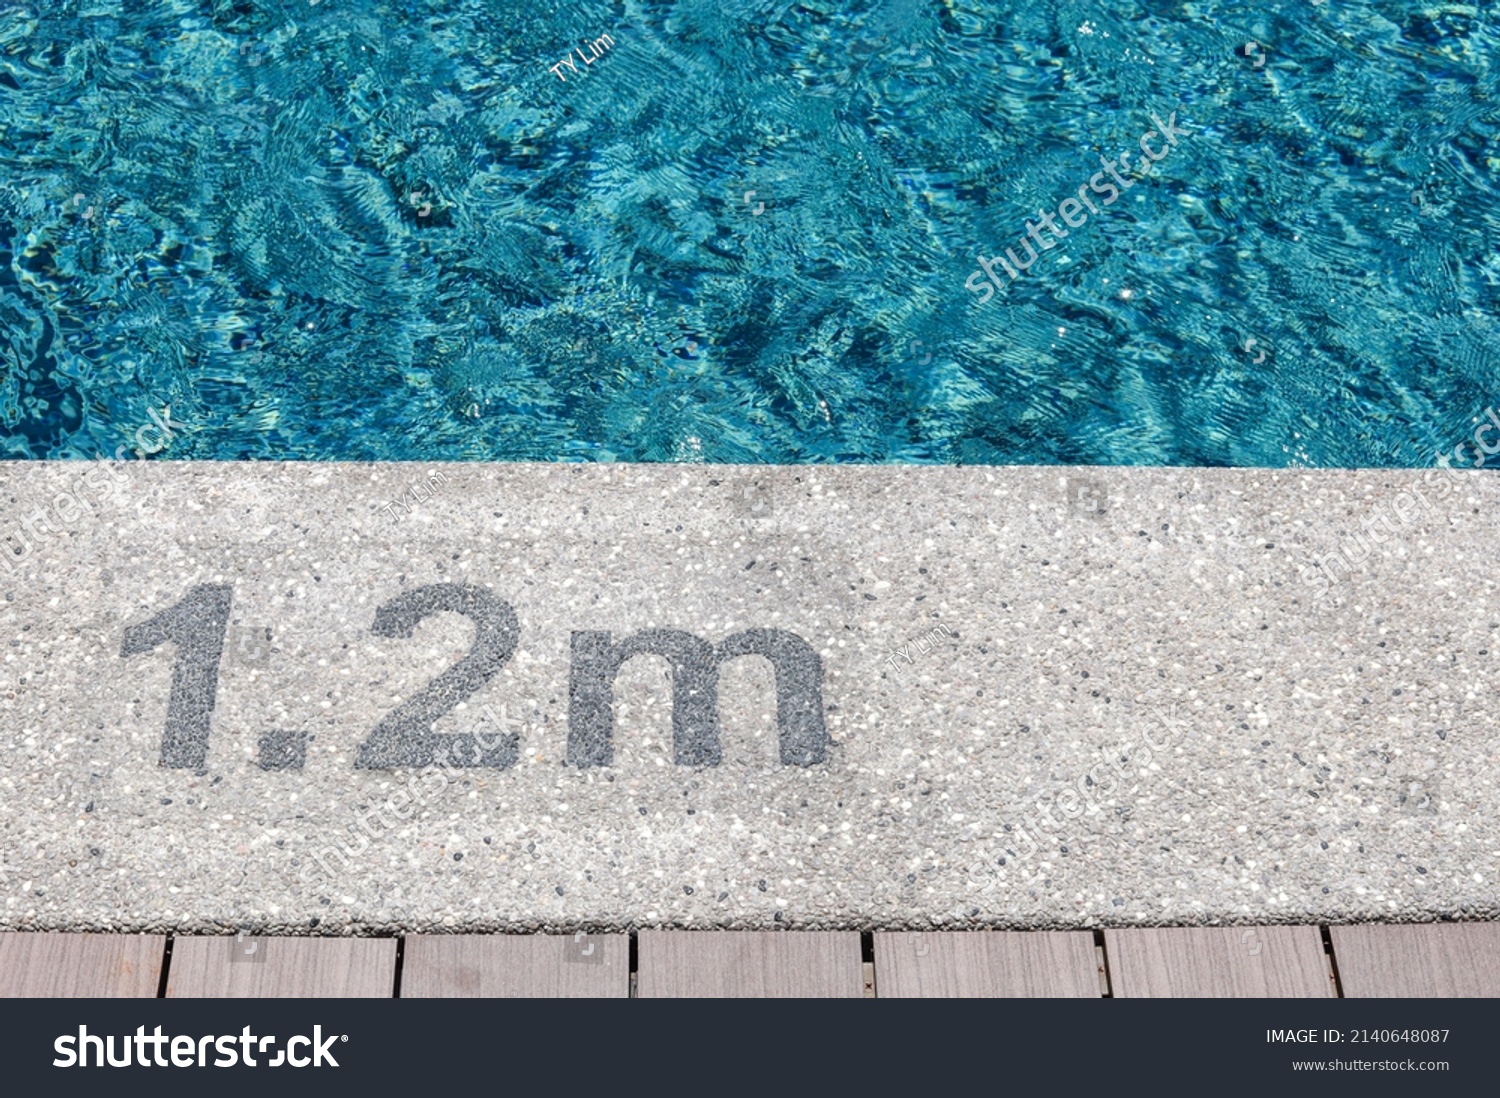 Pool depth warning sign on swimming poll side. Showing swimming pool depth of 1.2 meter. #2140648087